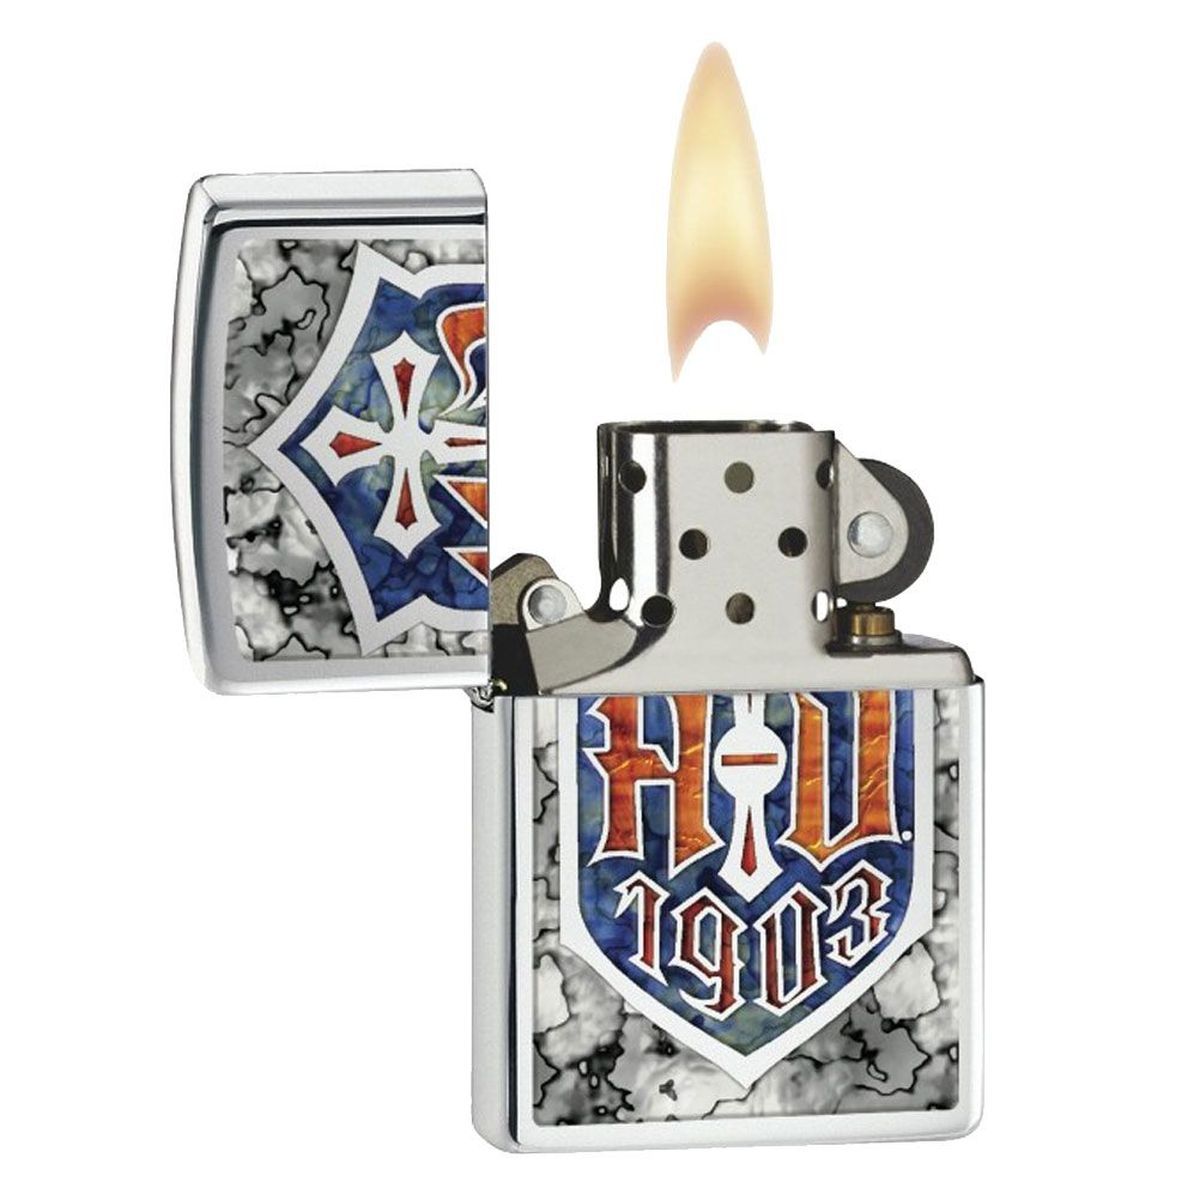 Harley Davidson Cross Lighter